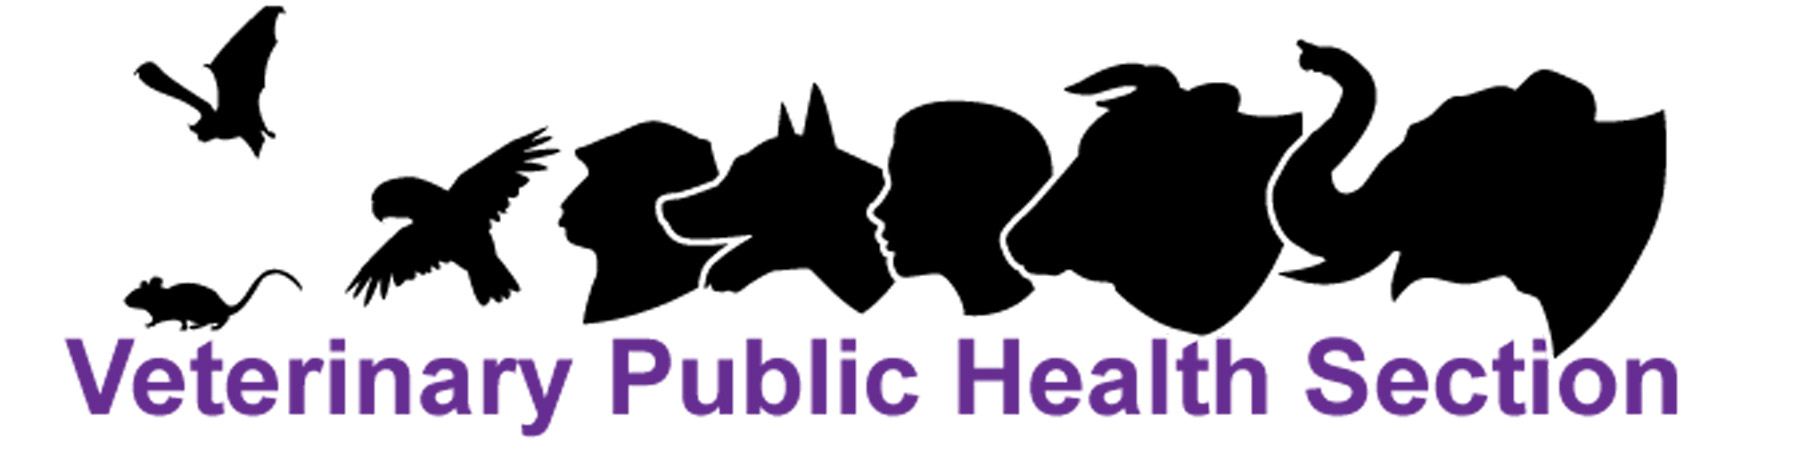 Veterinary Public Health Section